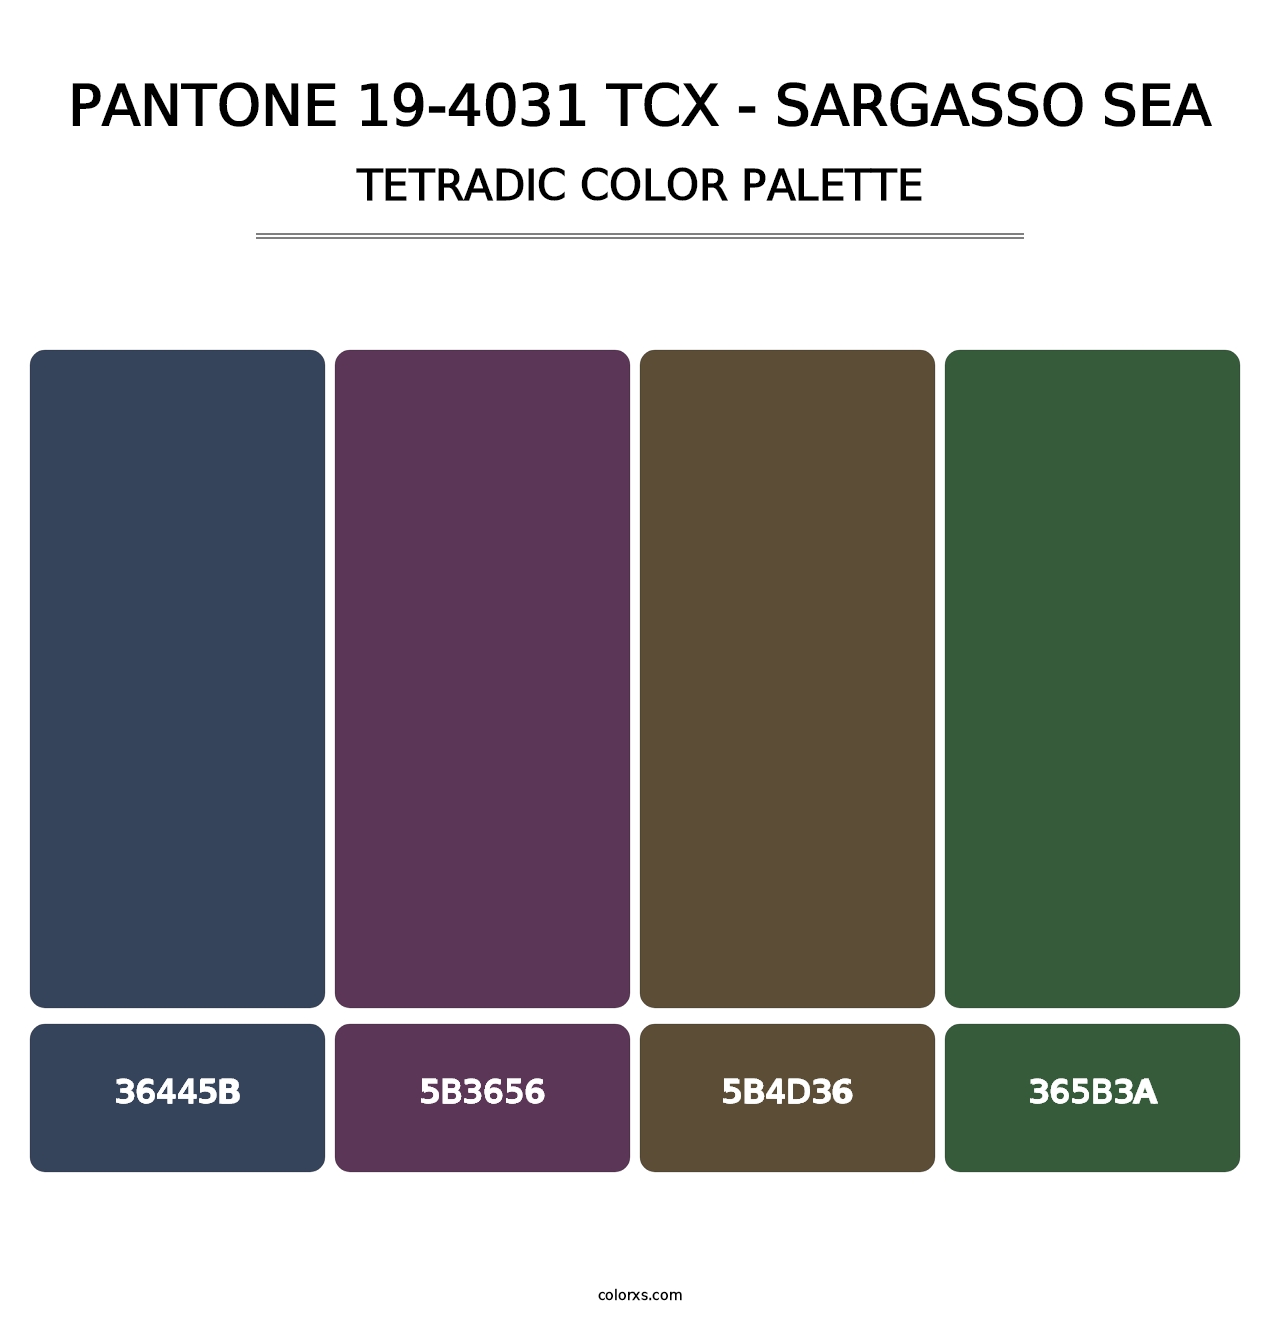 PANTONE 19-4031 TCX - Sargasso Sea - Tetradic Color Palette